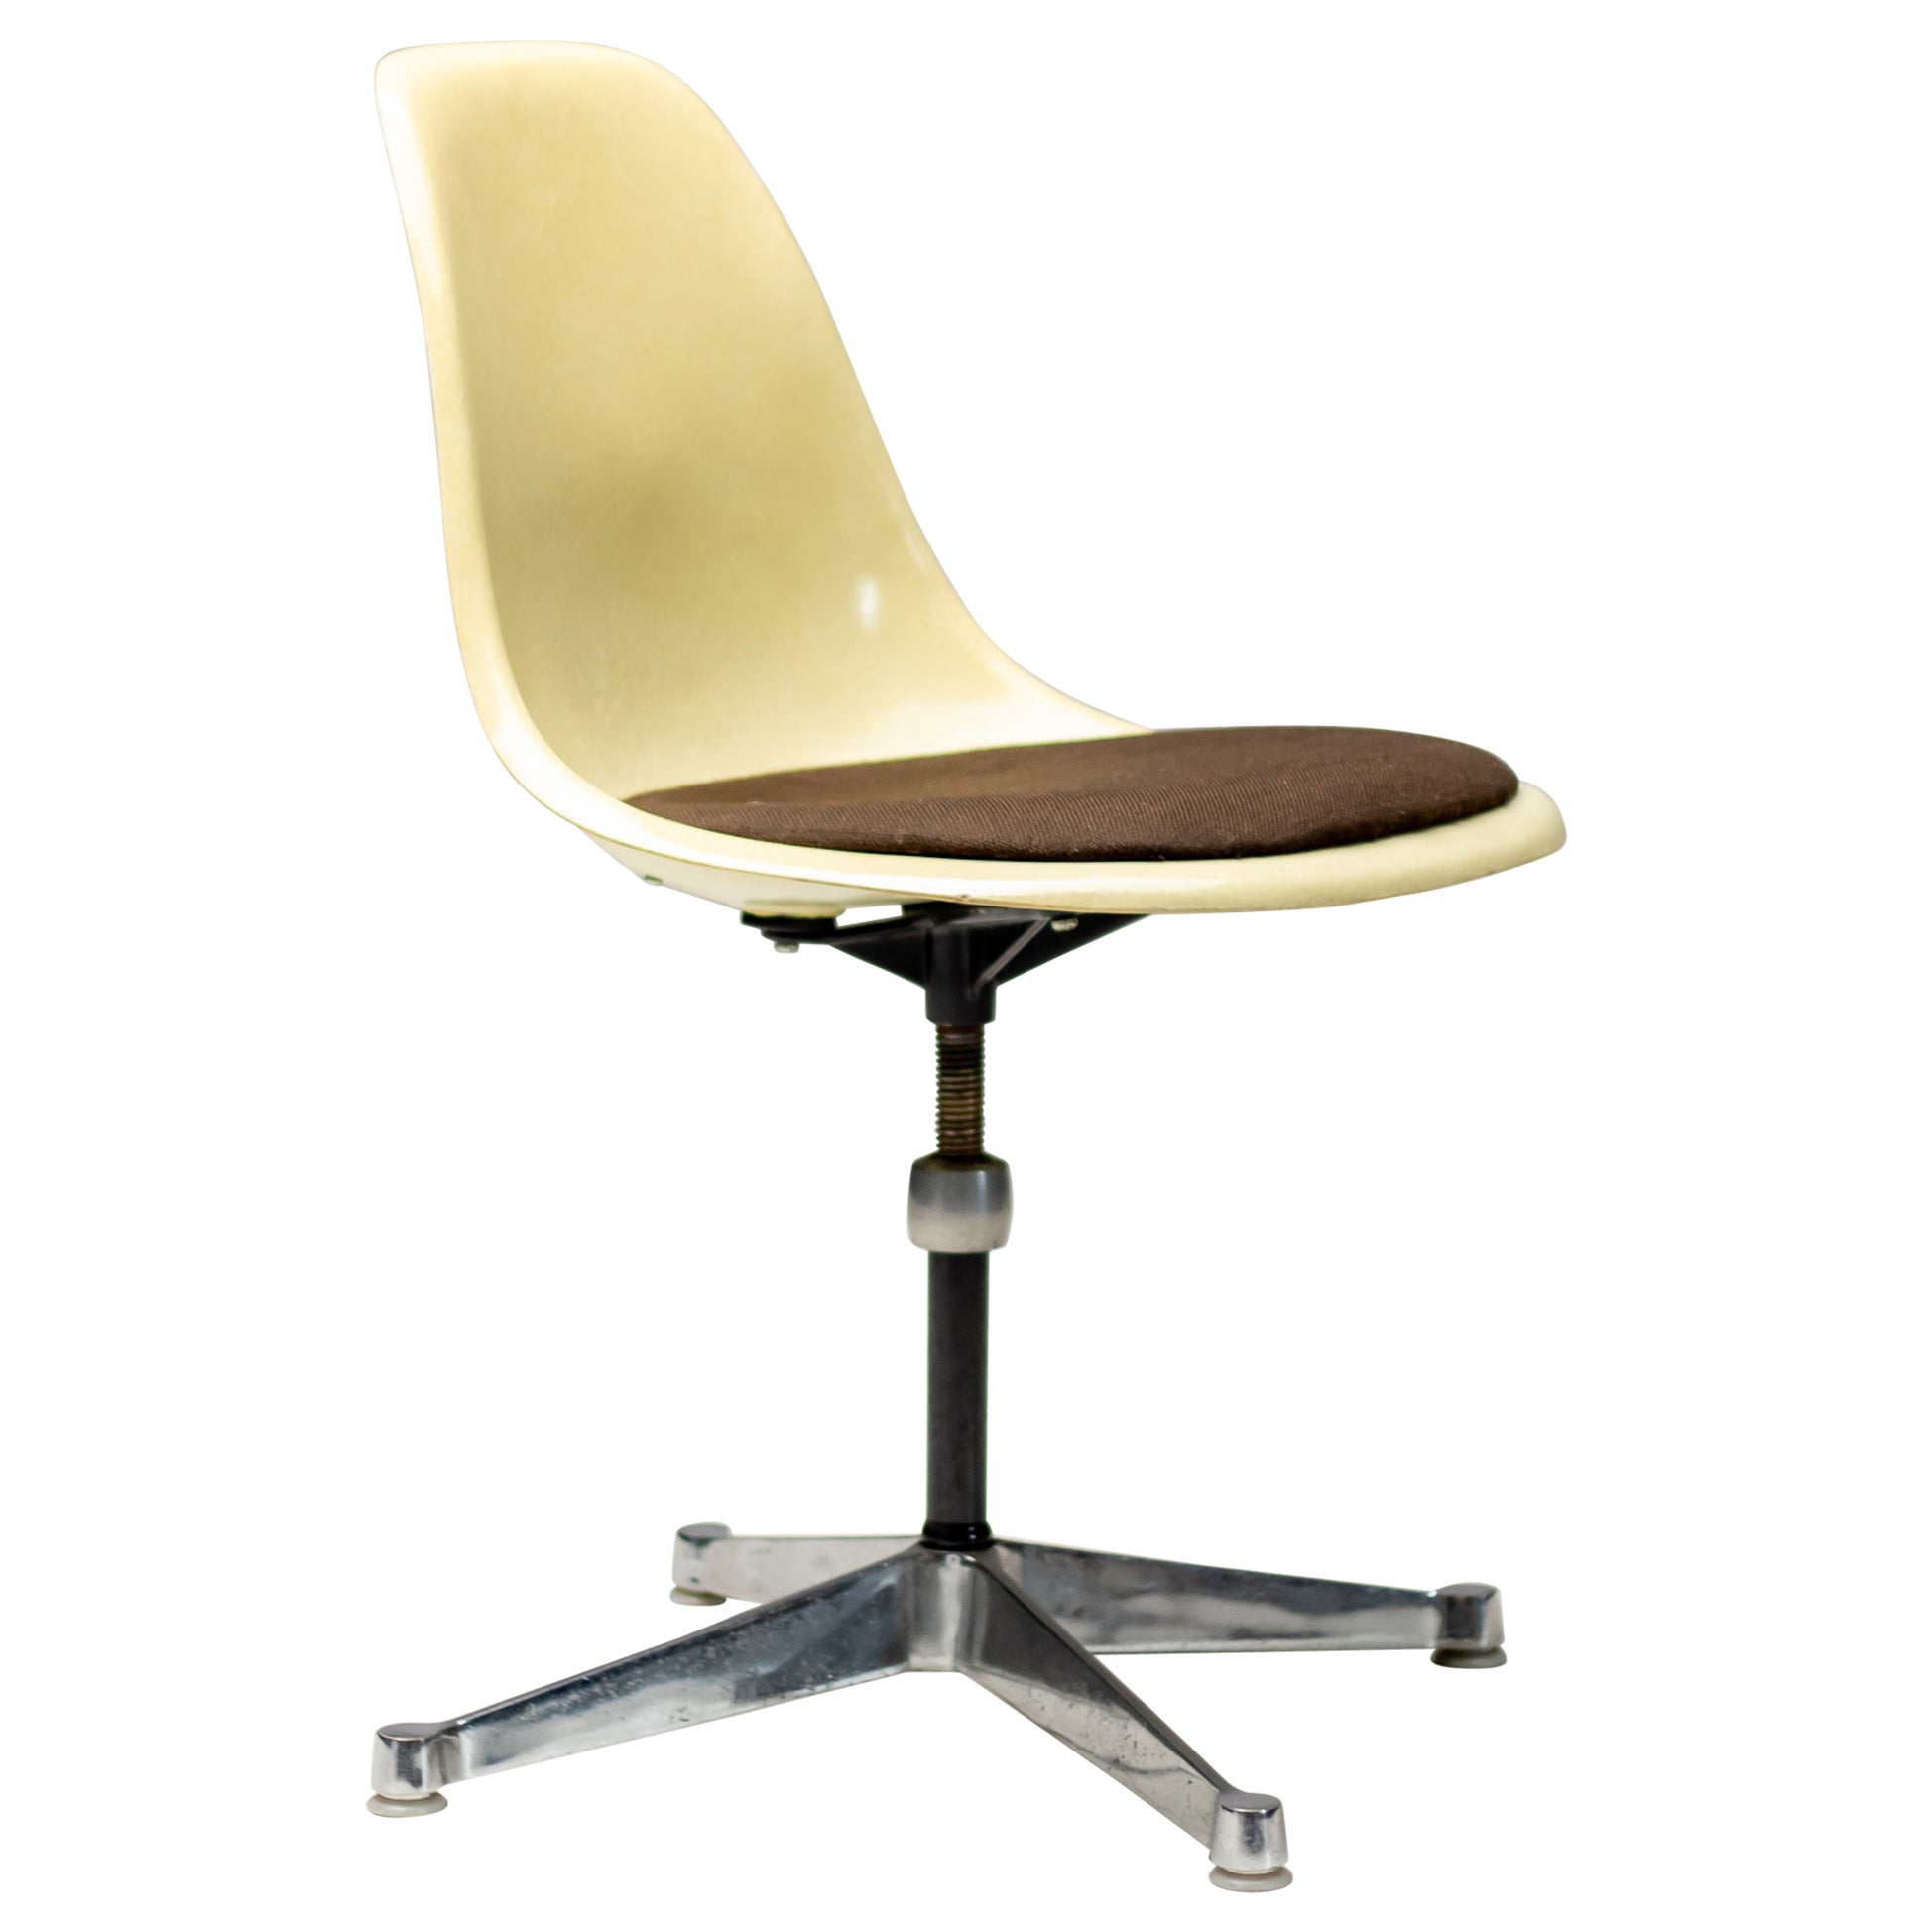 Eames Contract Base Desk Chair